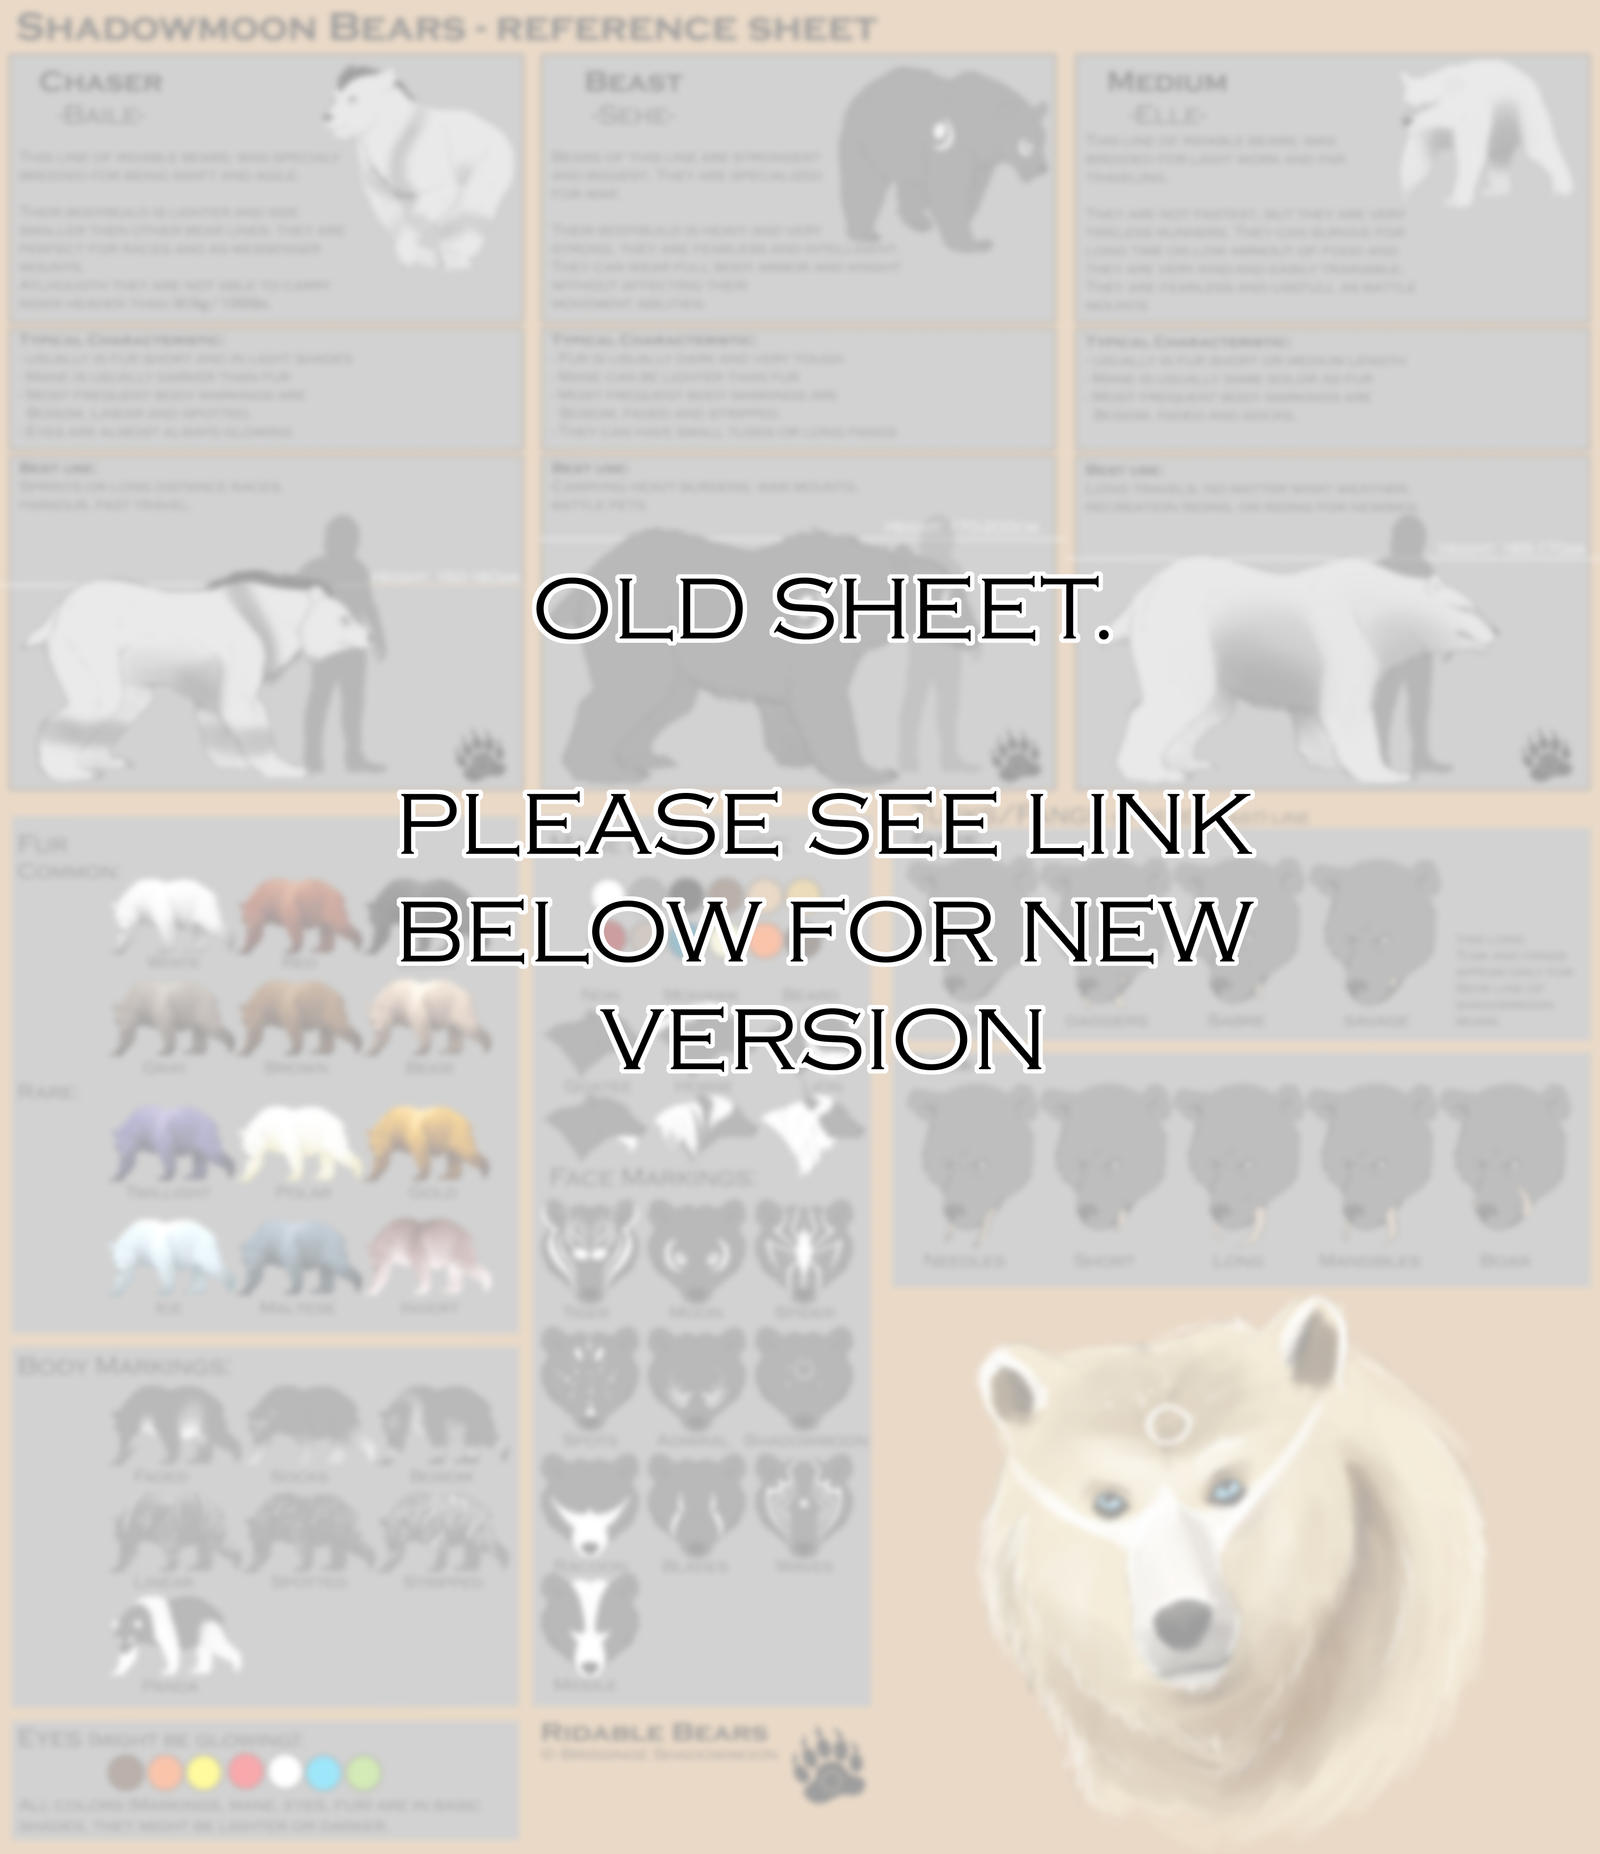 *OLD*Shadowmoon Bears - Reference sheet